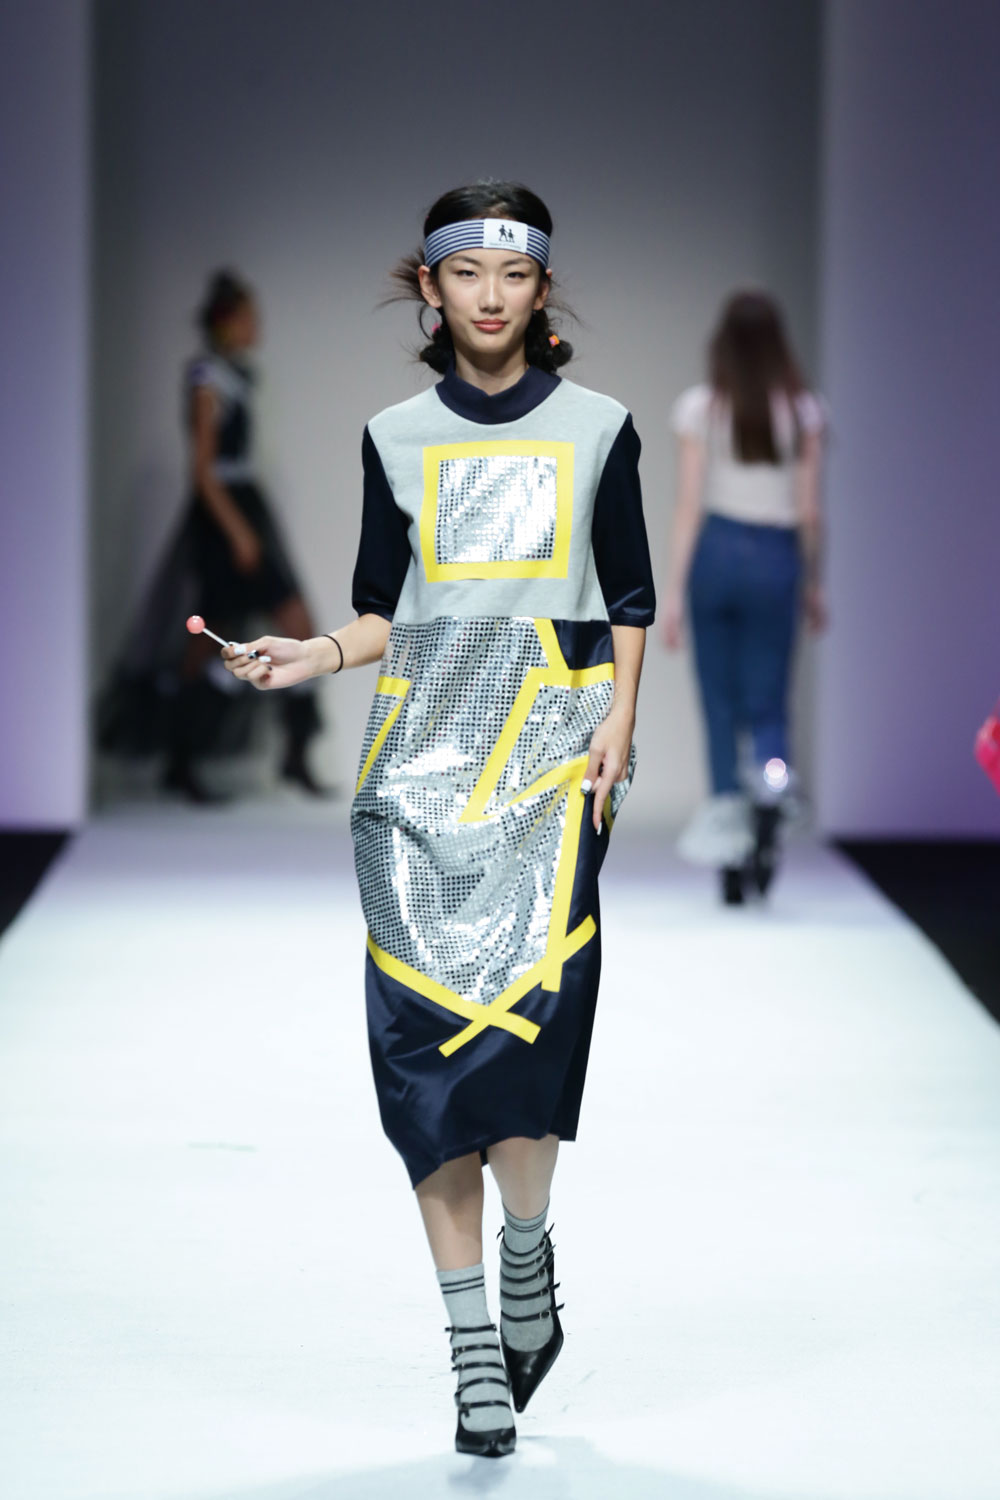 Shanghai Fashion Week — That's Shanghai — Events — Thatsmags.com